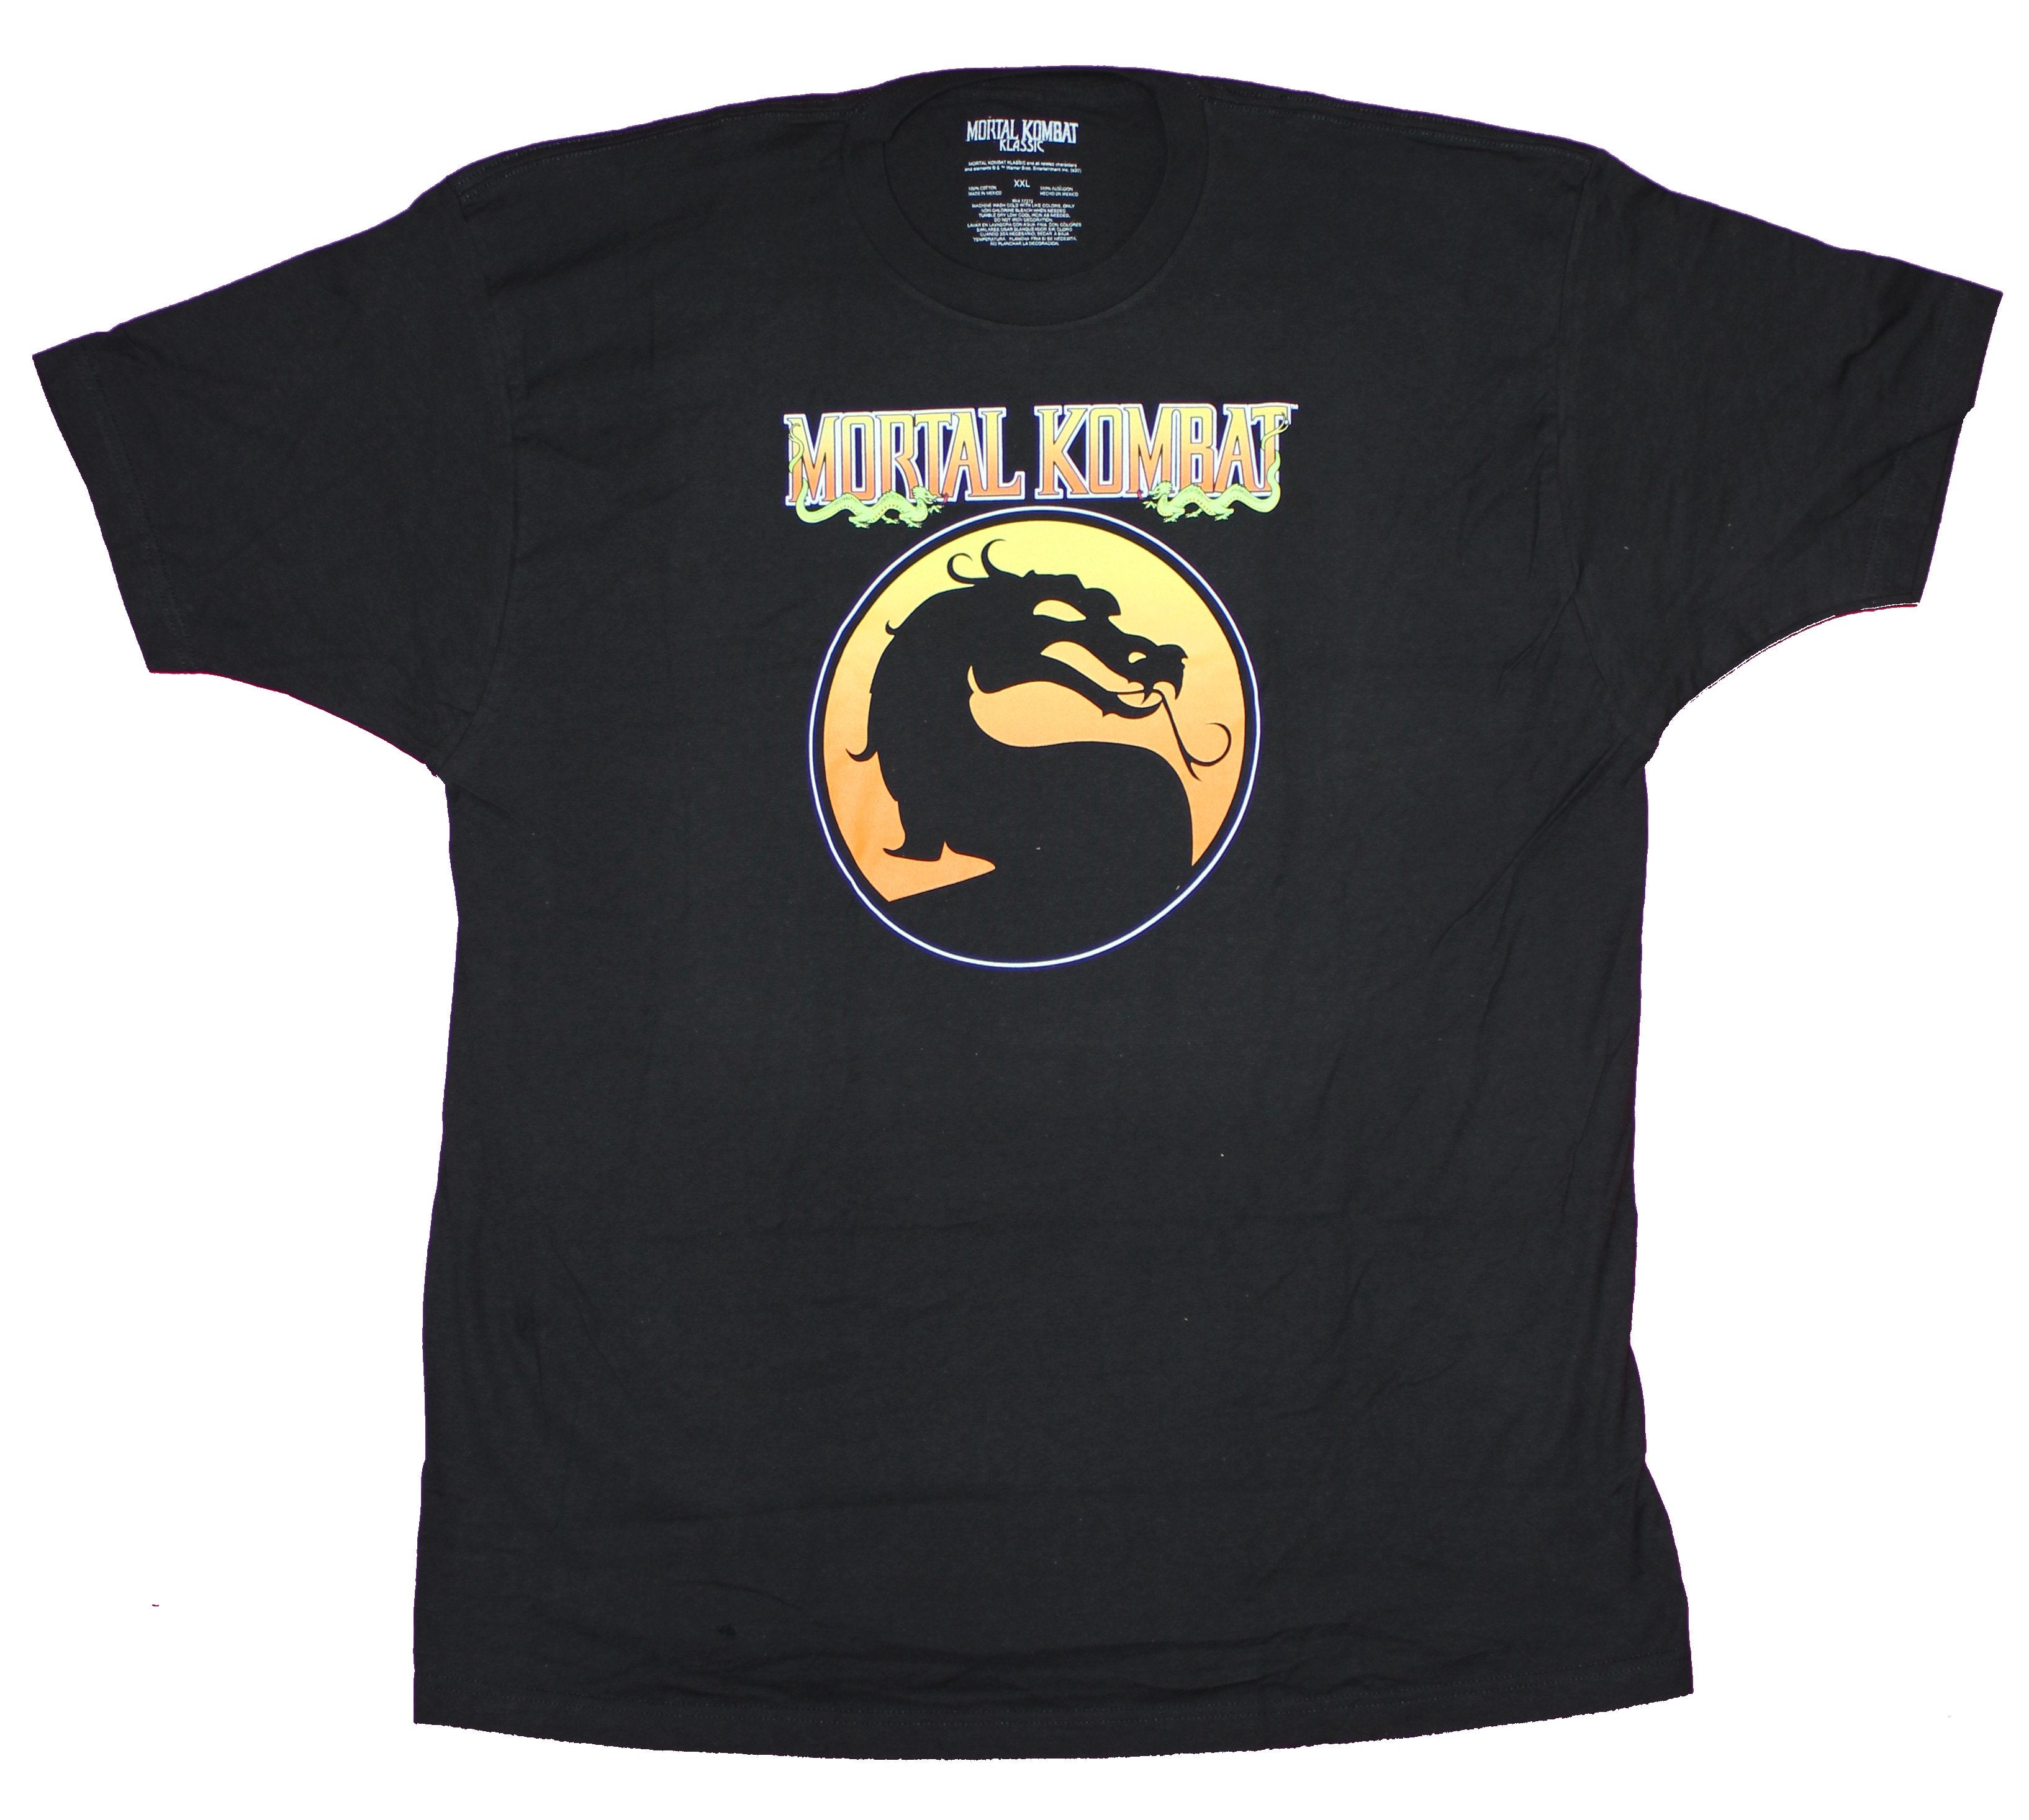 Mortal Kombat Mens T-Shirt  - Classic Yellow Orange Fade Logo Under Name